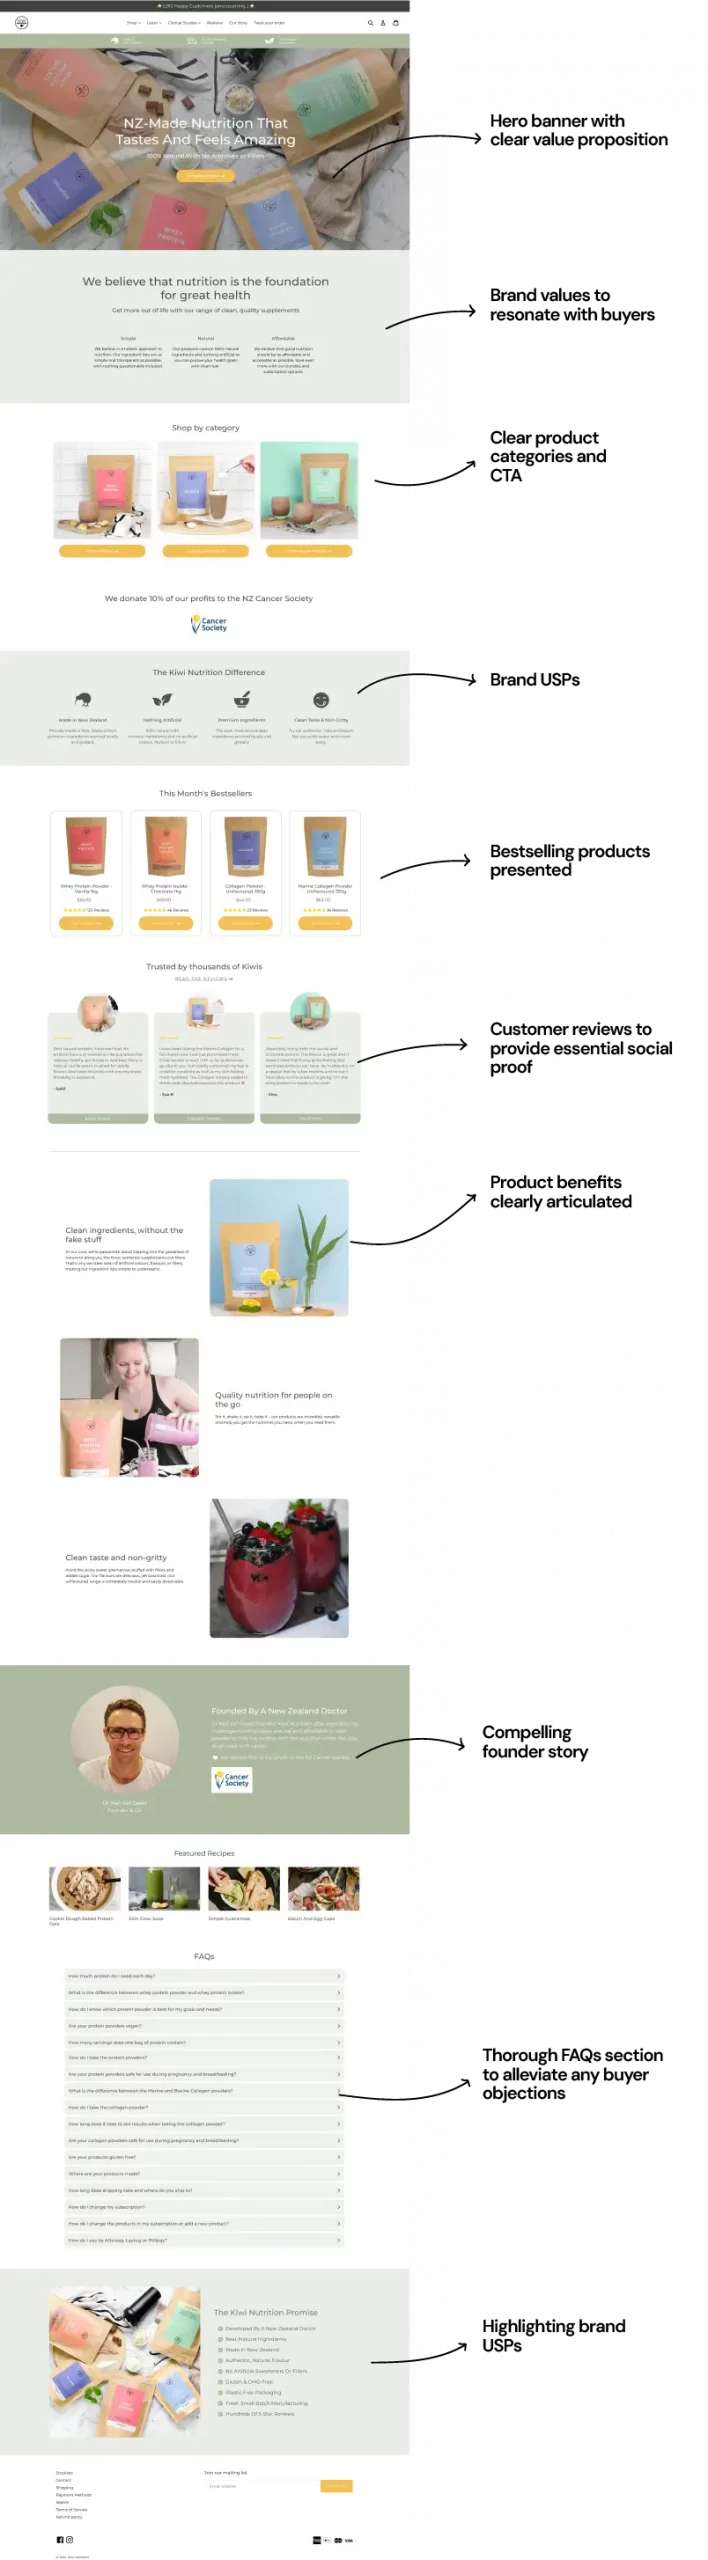 Pique Marketing - Landing Page Design